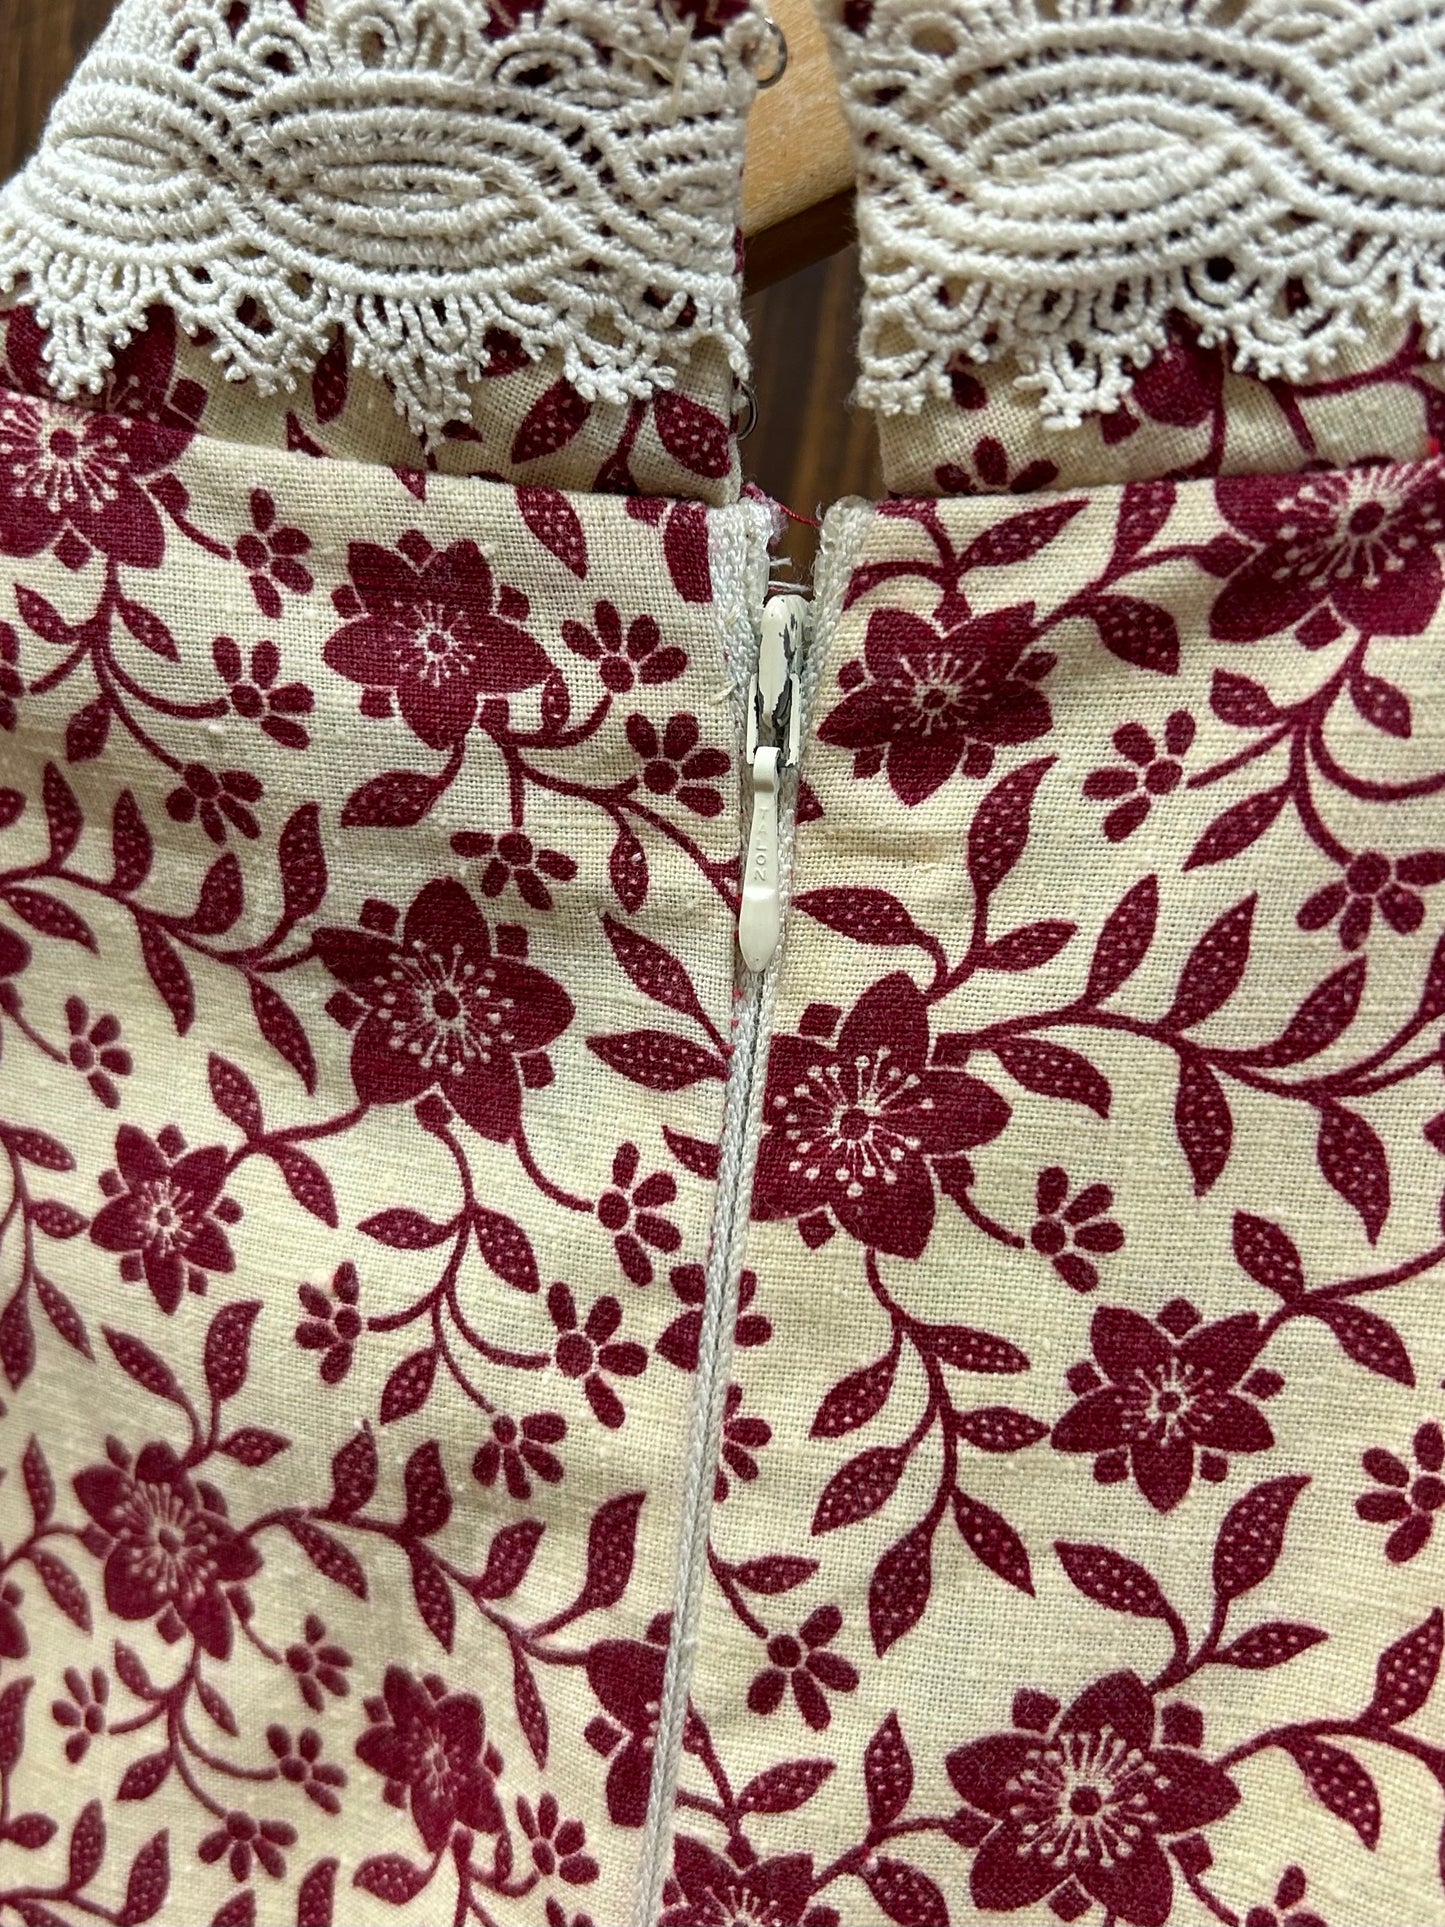 ’70s Vintage Toile Pattern Dress [A25973］